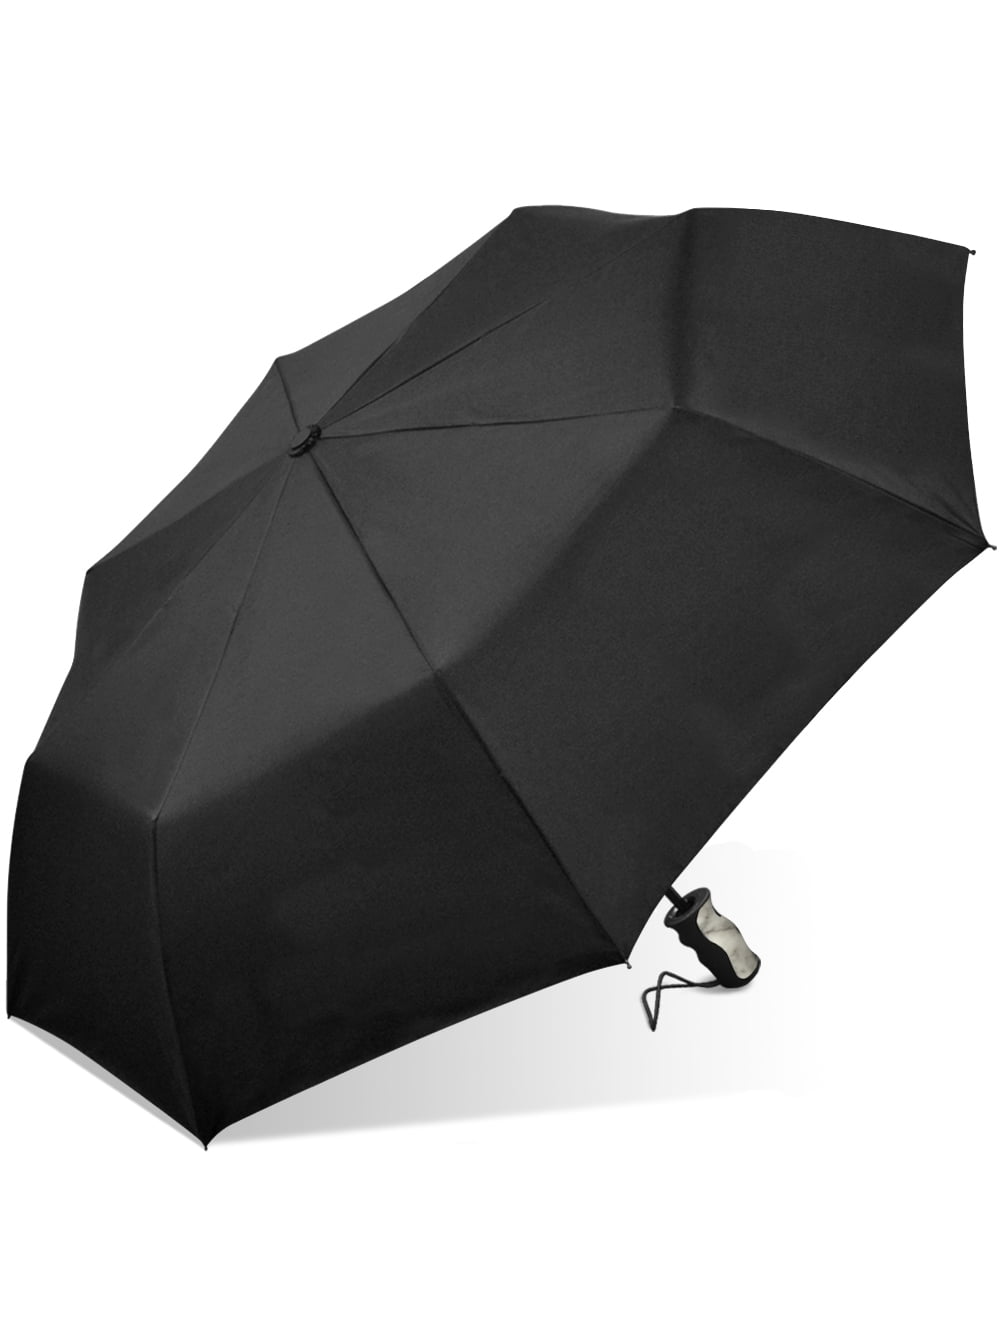 Cute Precious Sea Bean Automatic Tri-fold Umbrella Interesting Windproof Anti UV Rain/Sun Travel Umbrella Light Weight. 